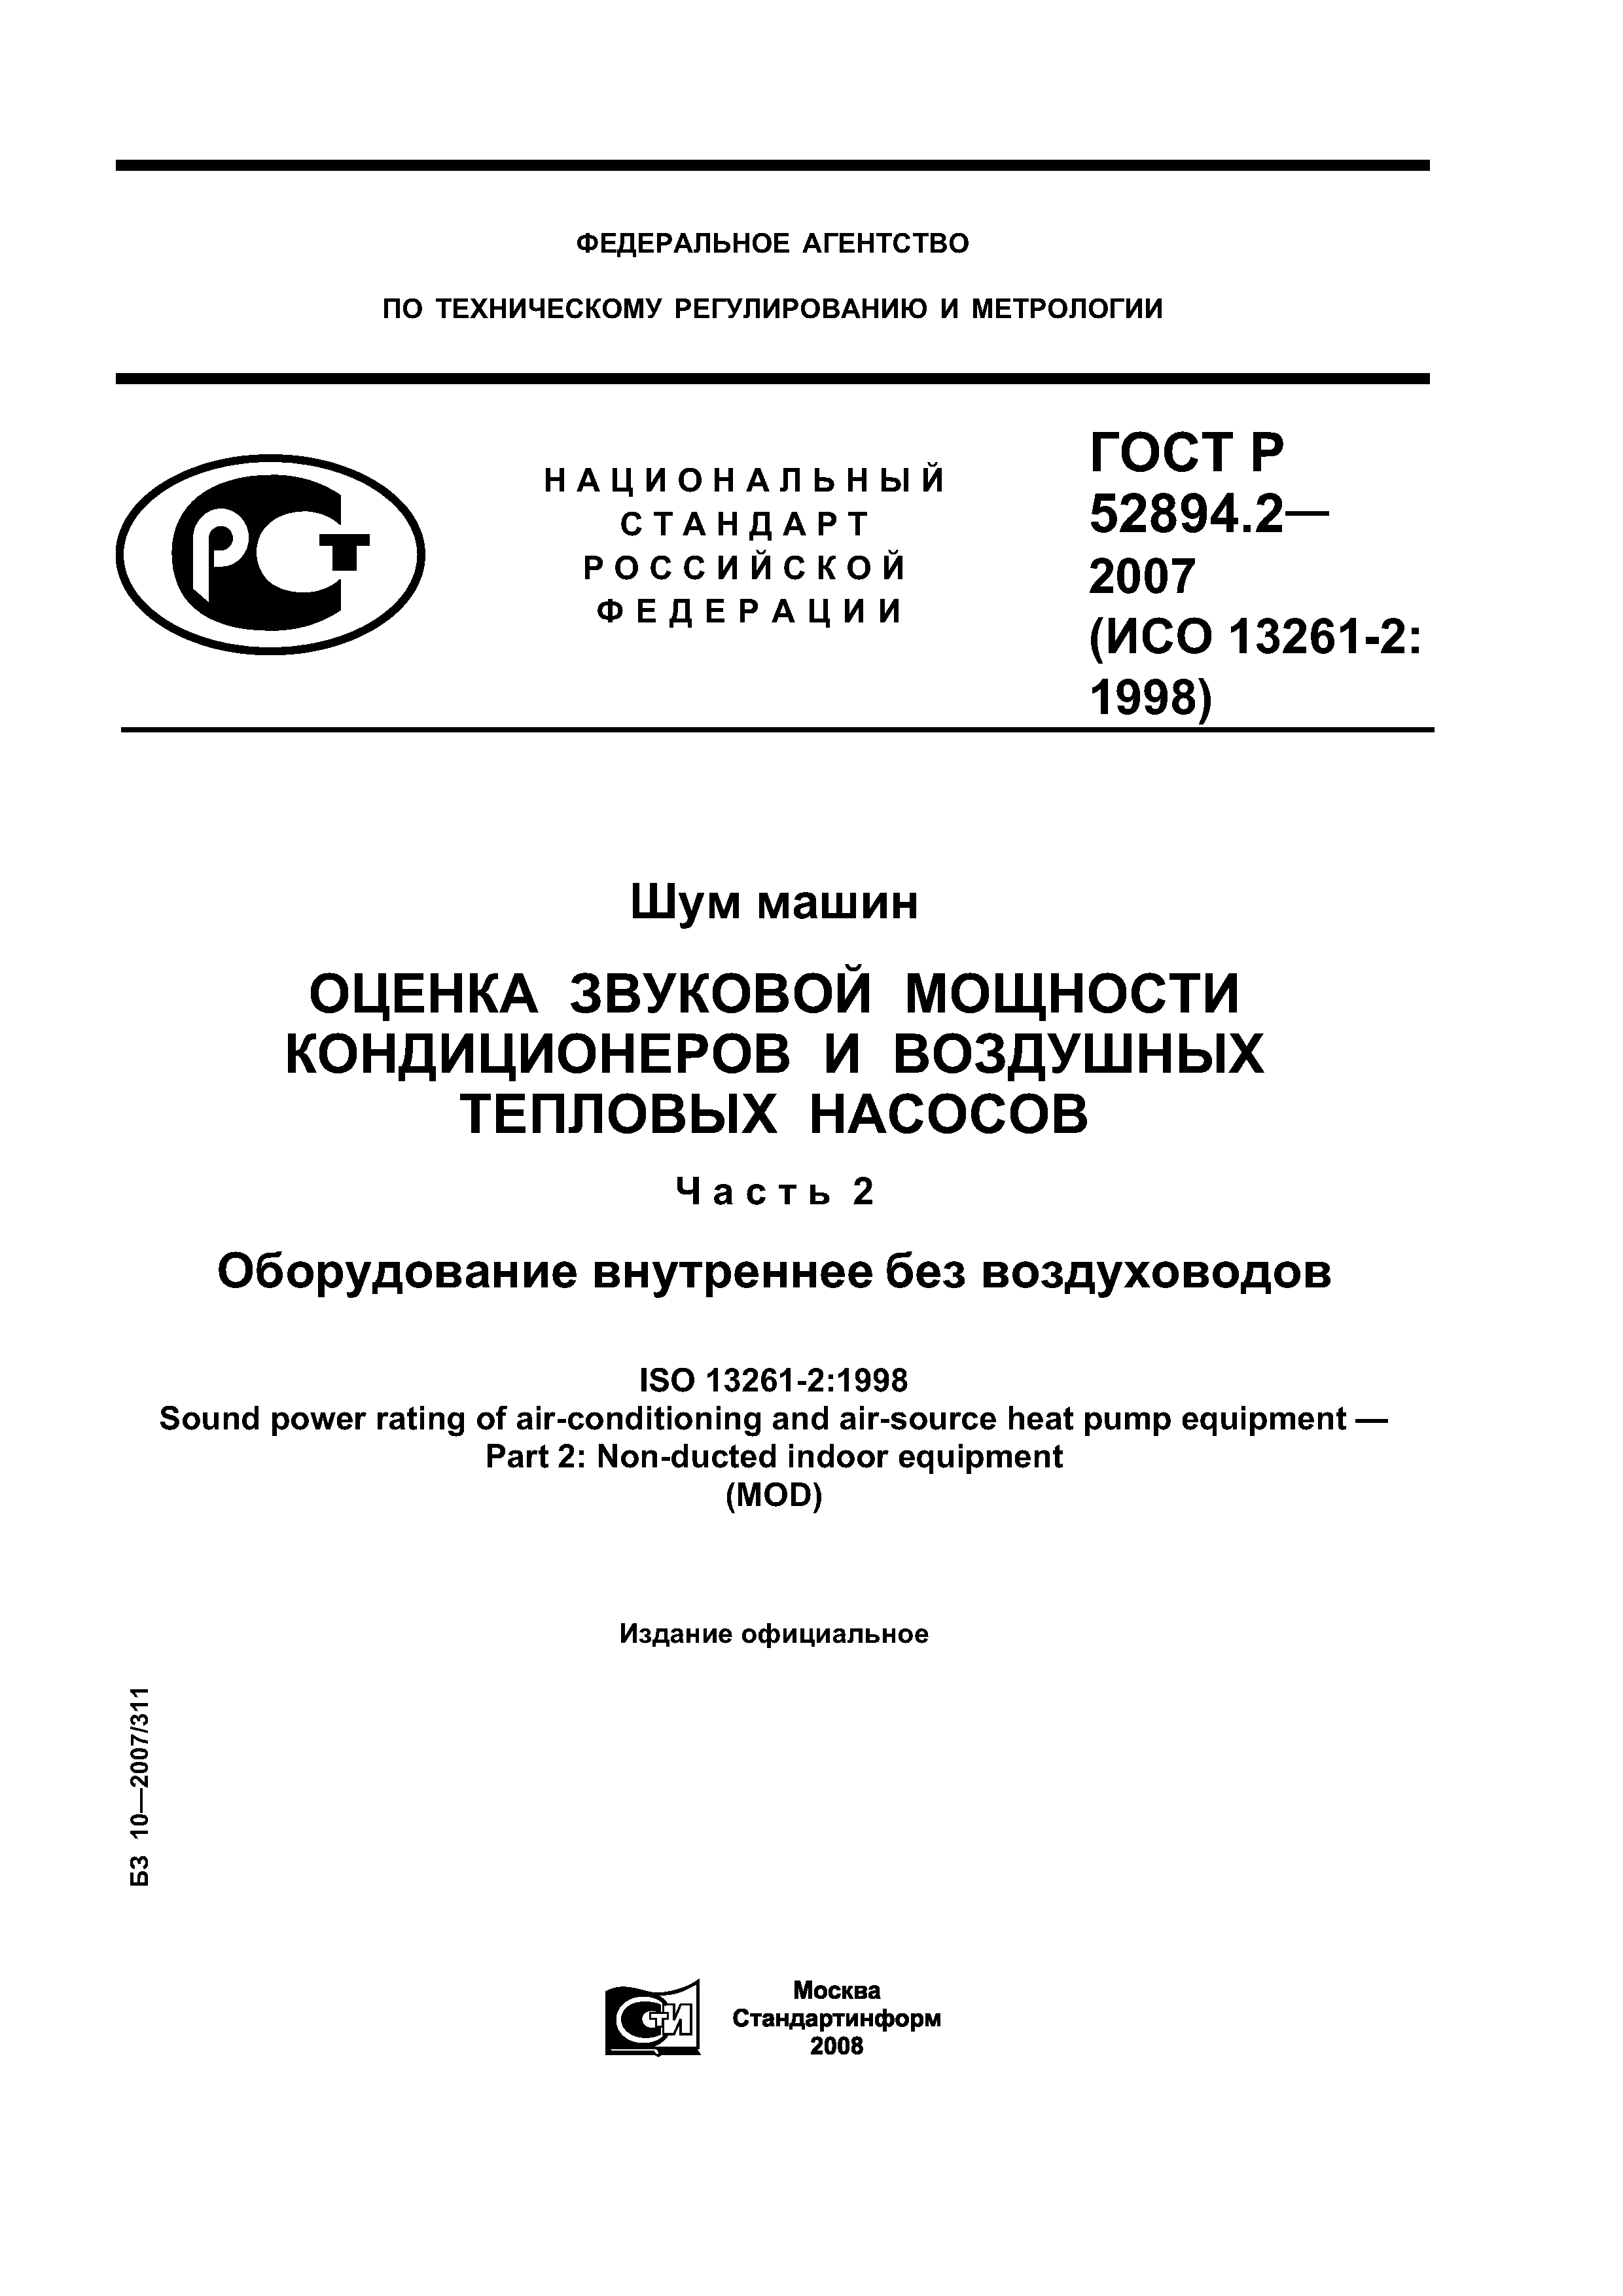 ГОСТ Р 52894.2-2007